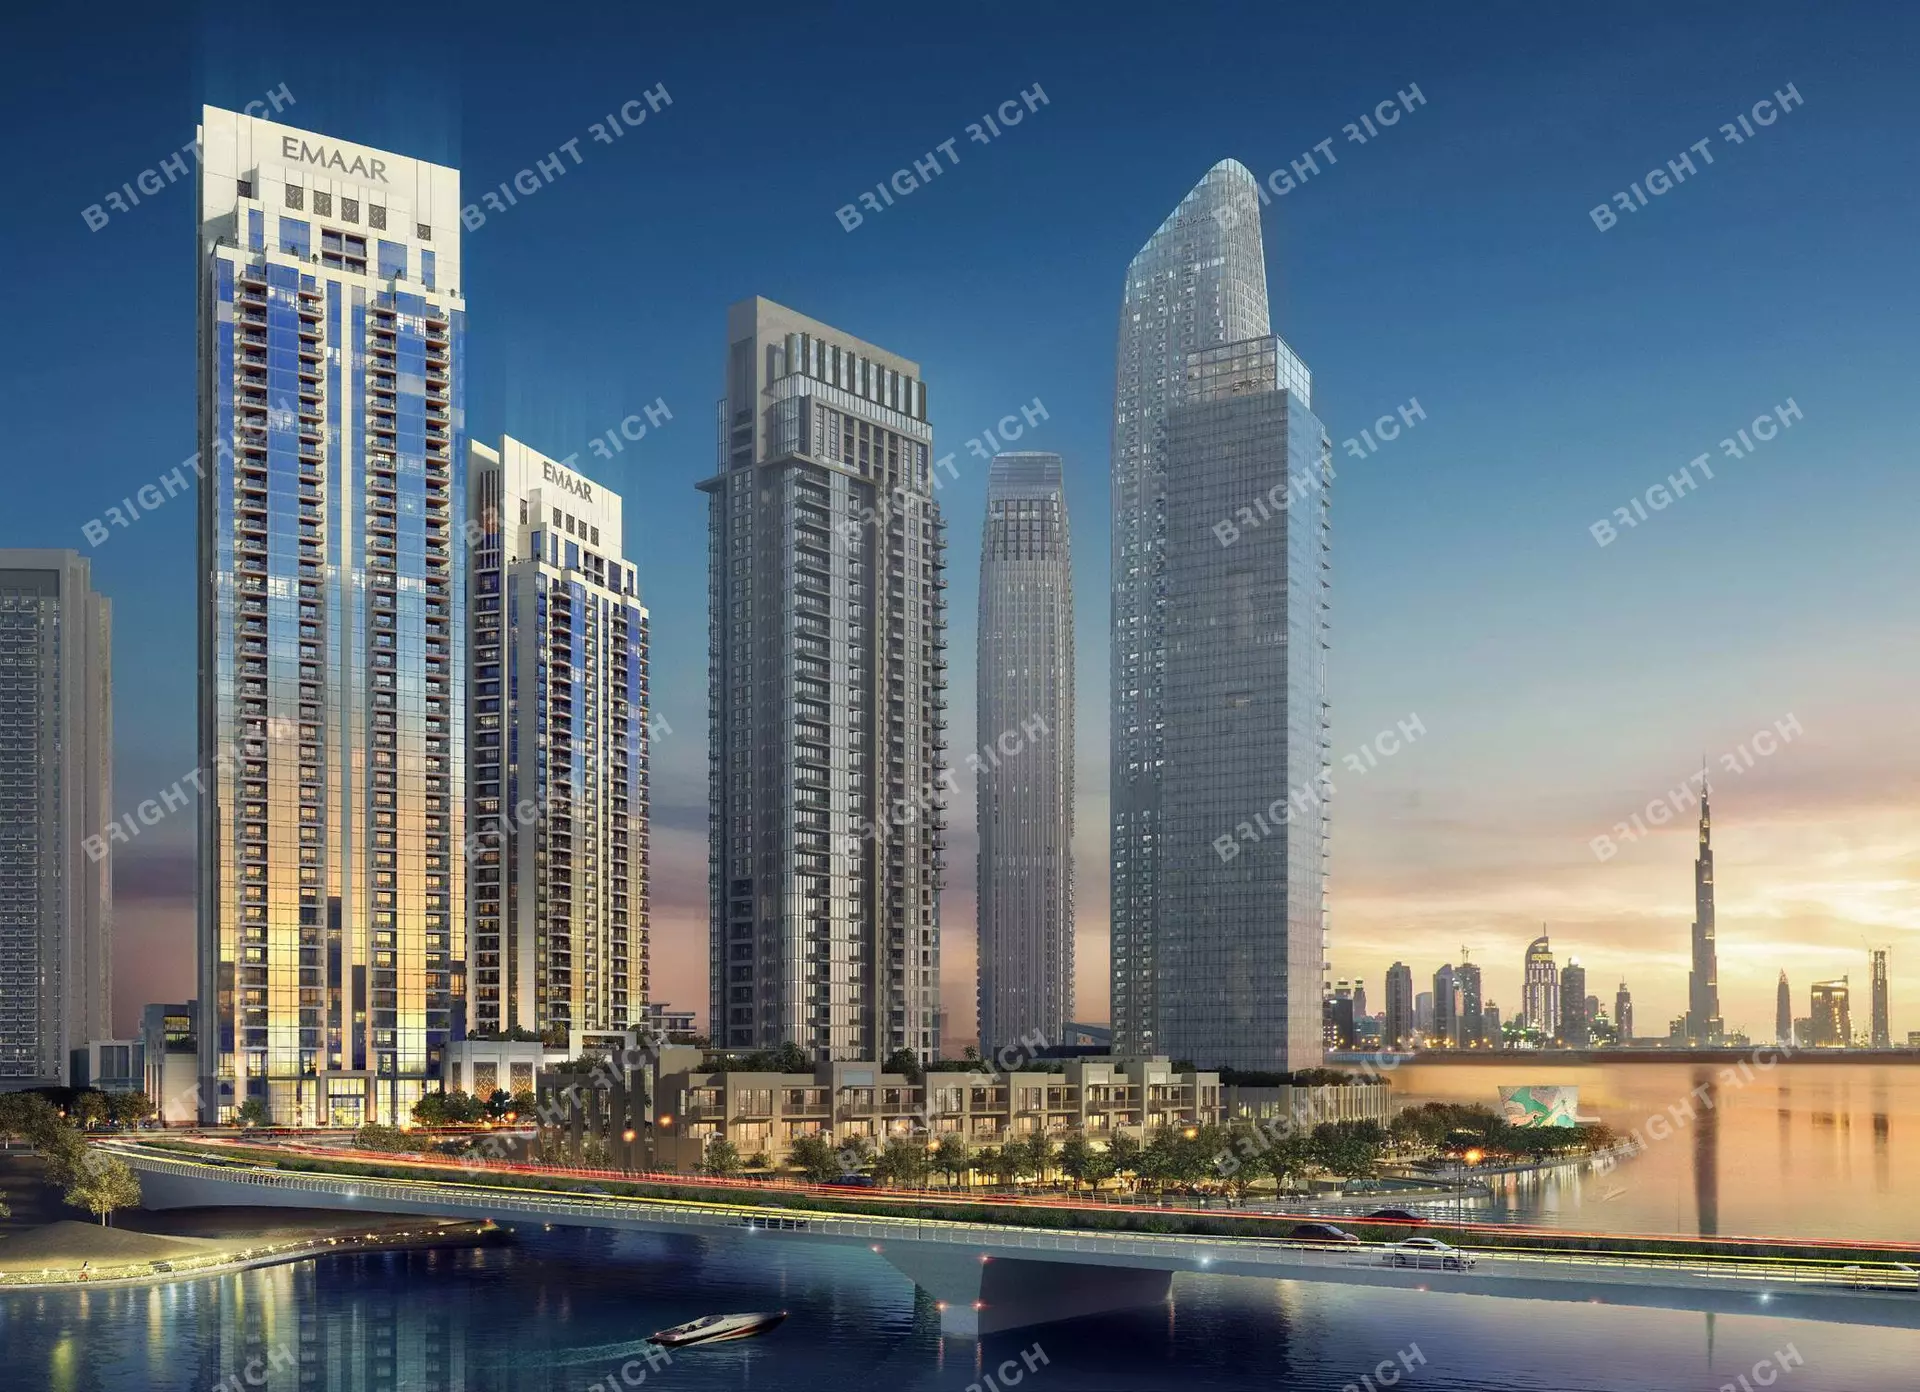 Creek Rise Apartments, apart complex in Dubai - 0